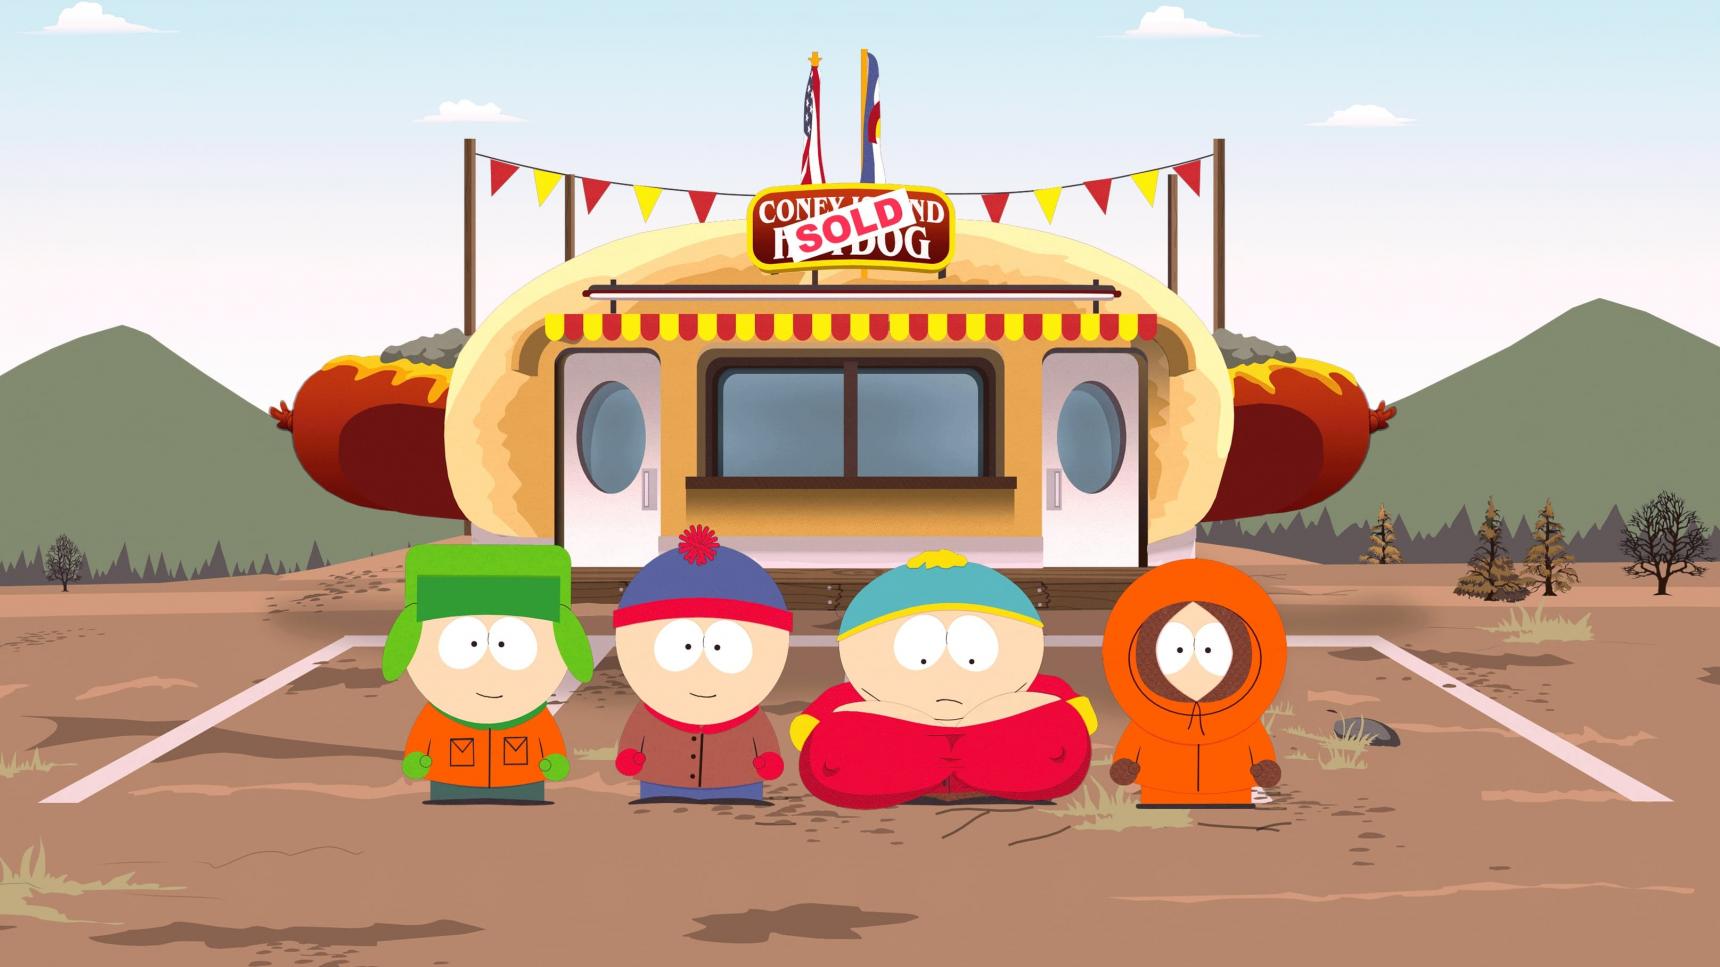 poster de South Park: Las guerras de streaming parte 2